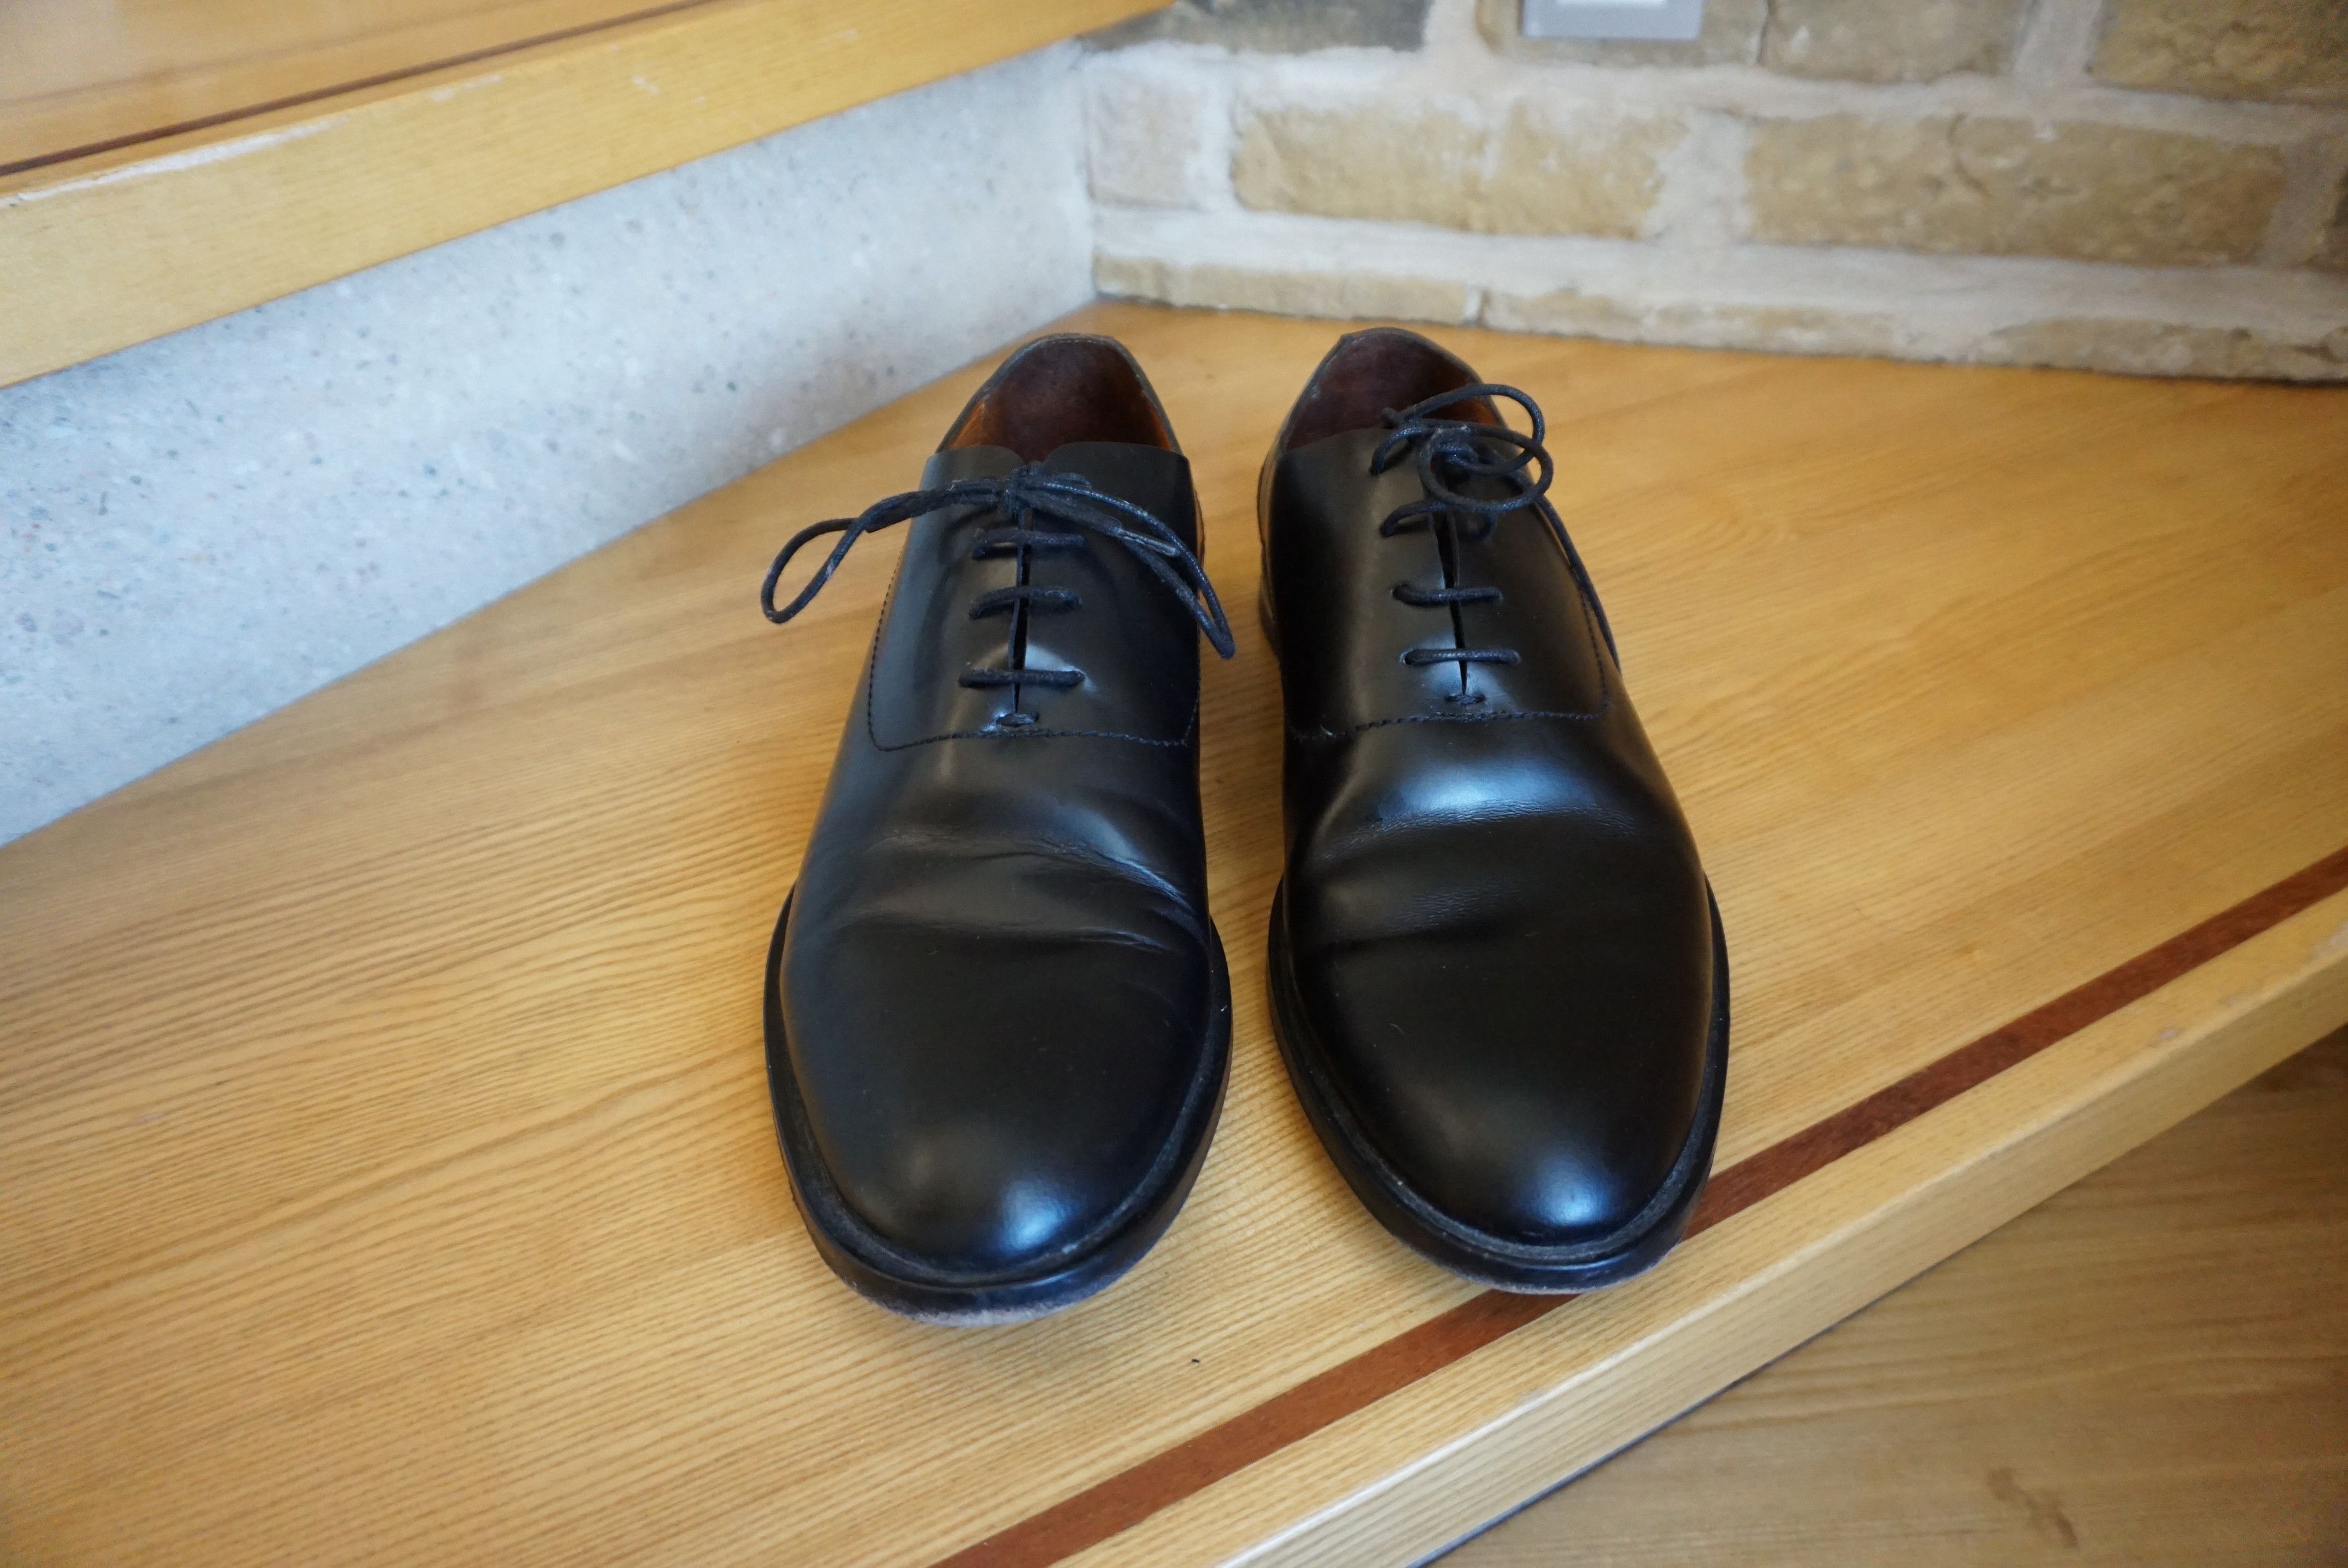 Cos COS RPR$250 leather office shoes EU44 black formal lace up Size US 10.5 / EU 43-44 - 2 Preview